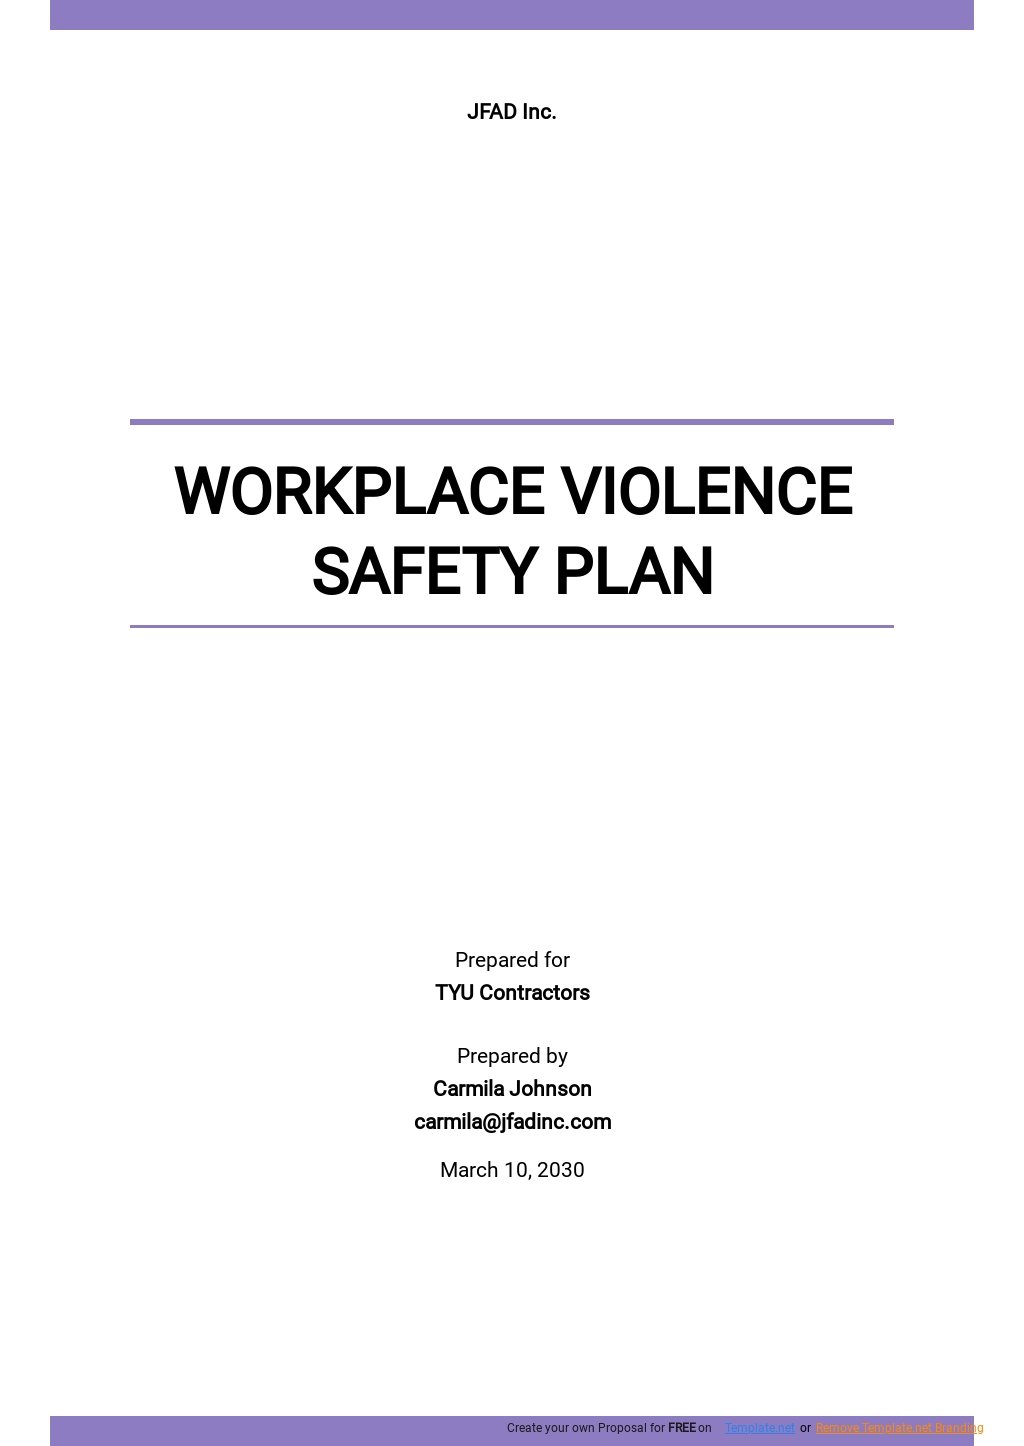 Workplace Violence Safety Plan Template.jpe